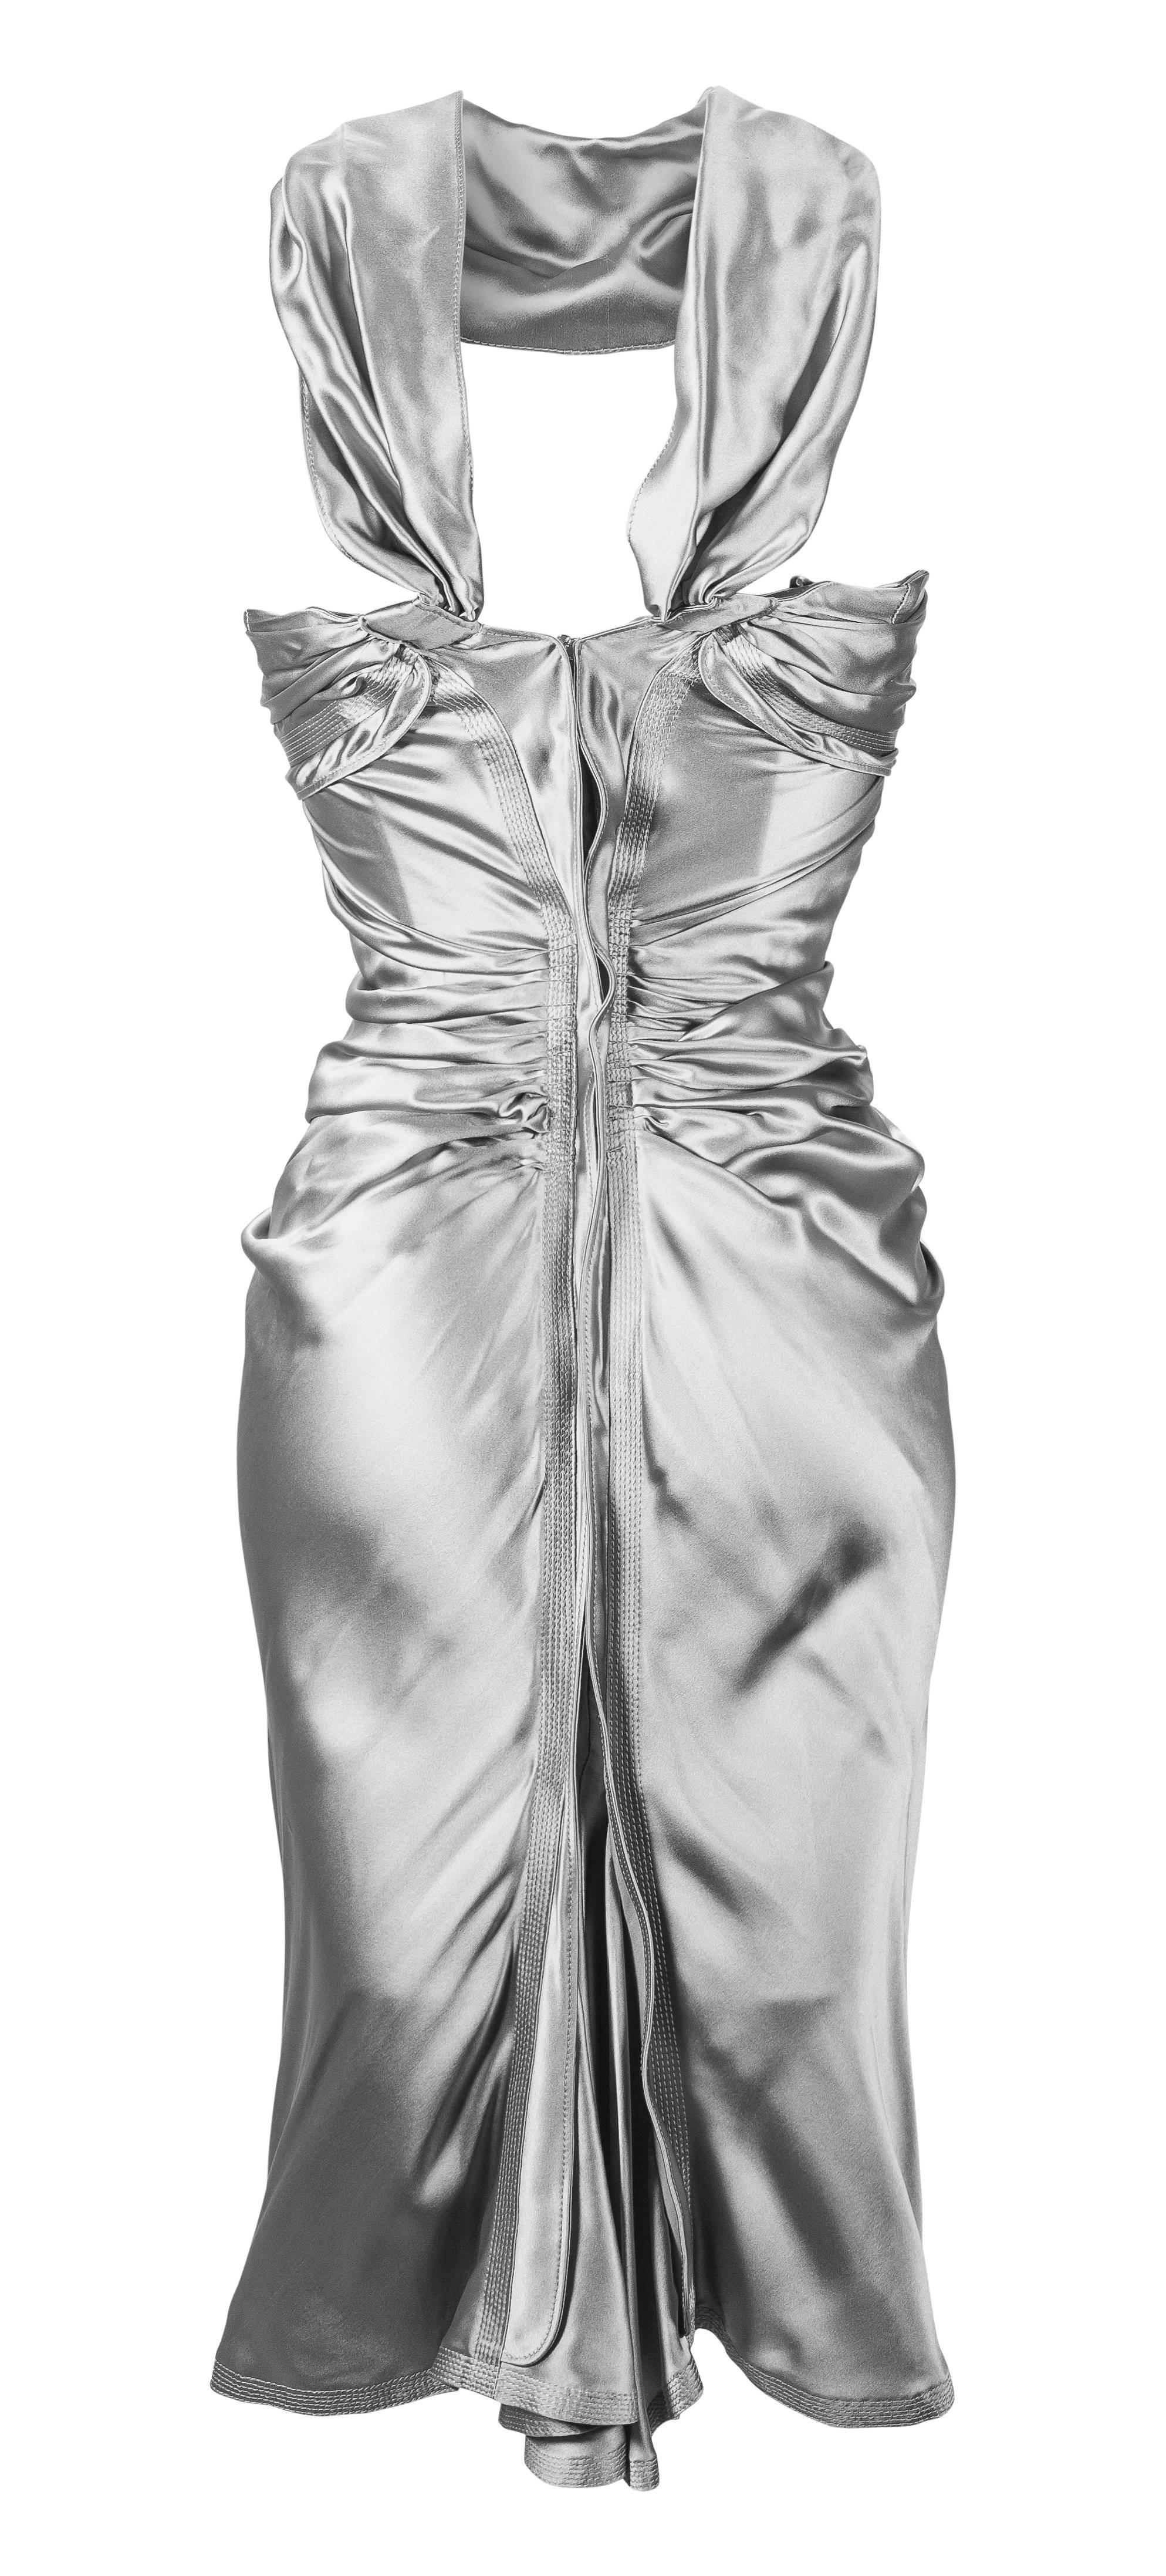 Yves Saint Laurent Fall 2003 
Grey Silk Dress with sash detail
FR38